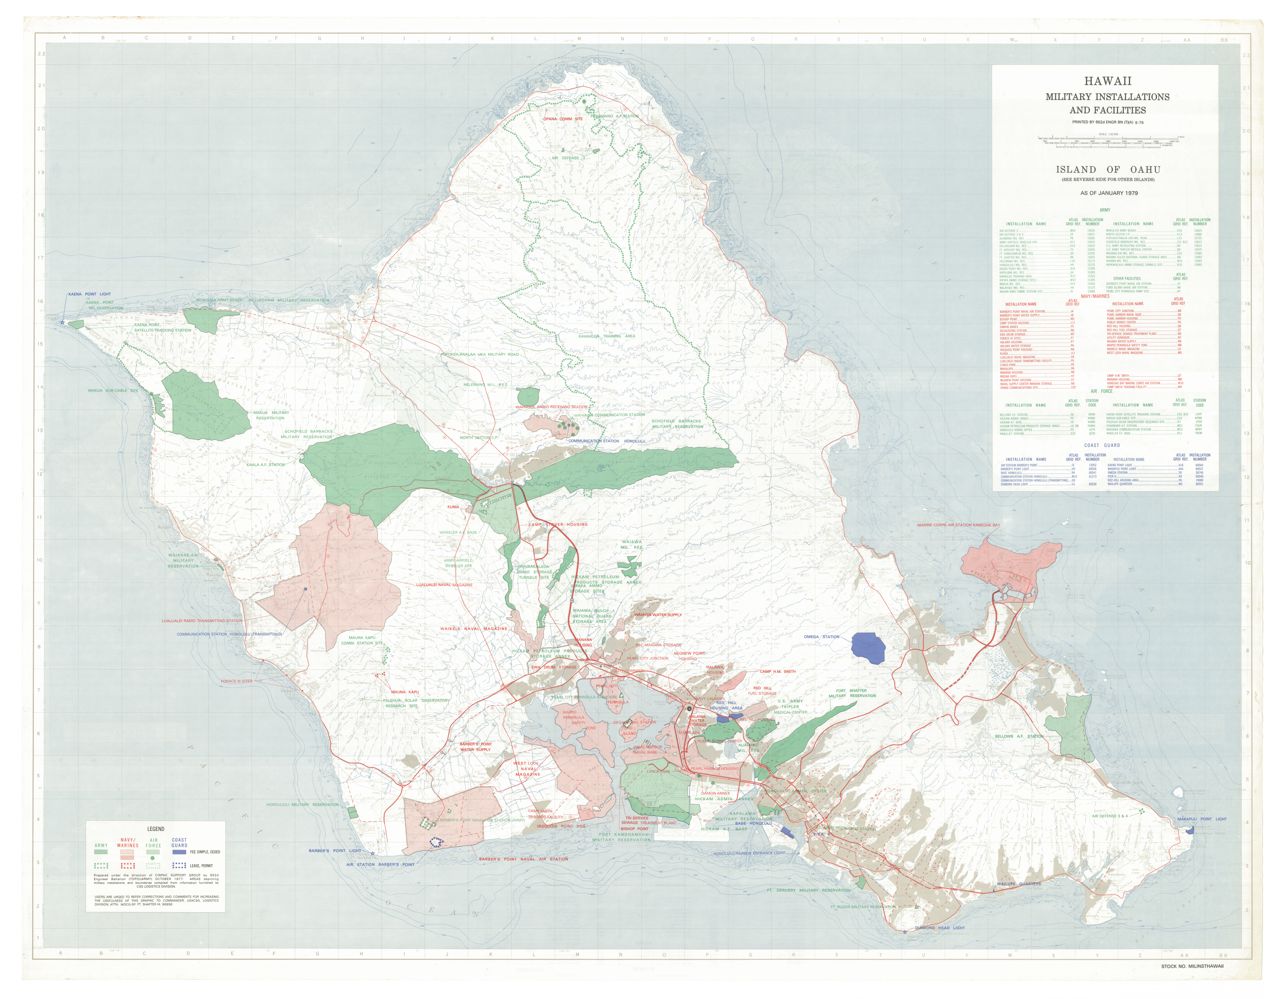 1979 Hawaii Military Installations and Facilities